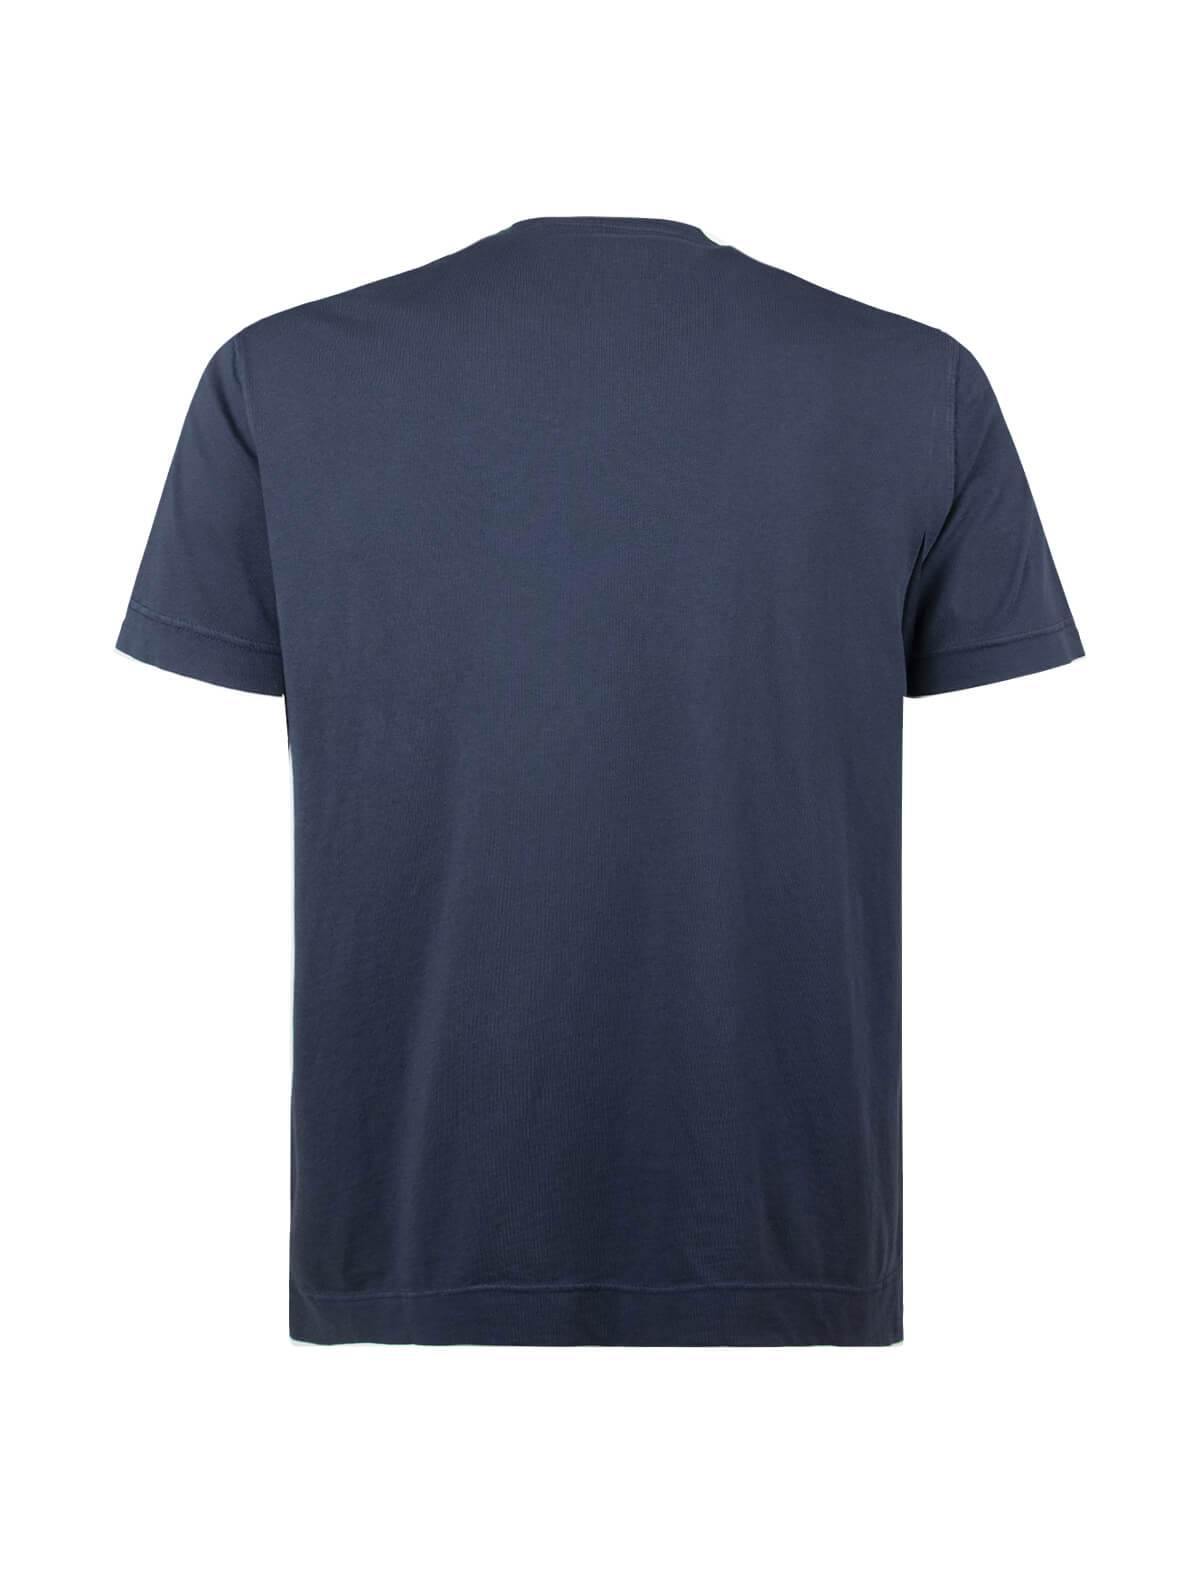 CIRCOLO 1901 Crew Neck Cotton T-Shirt in Blue Black | CLOSET Singapore